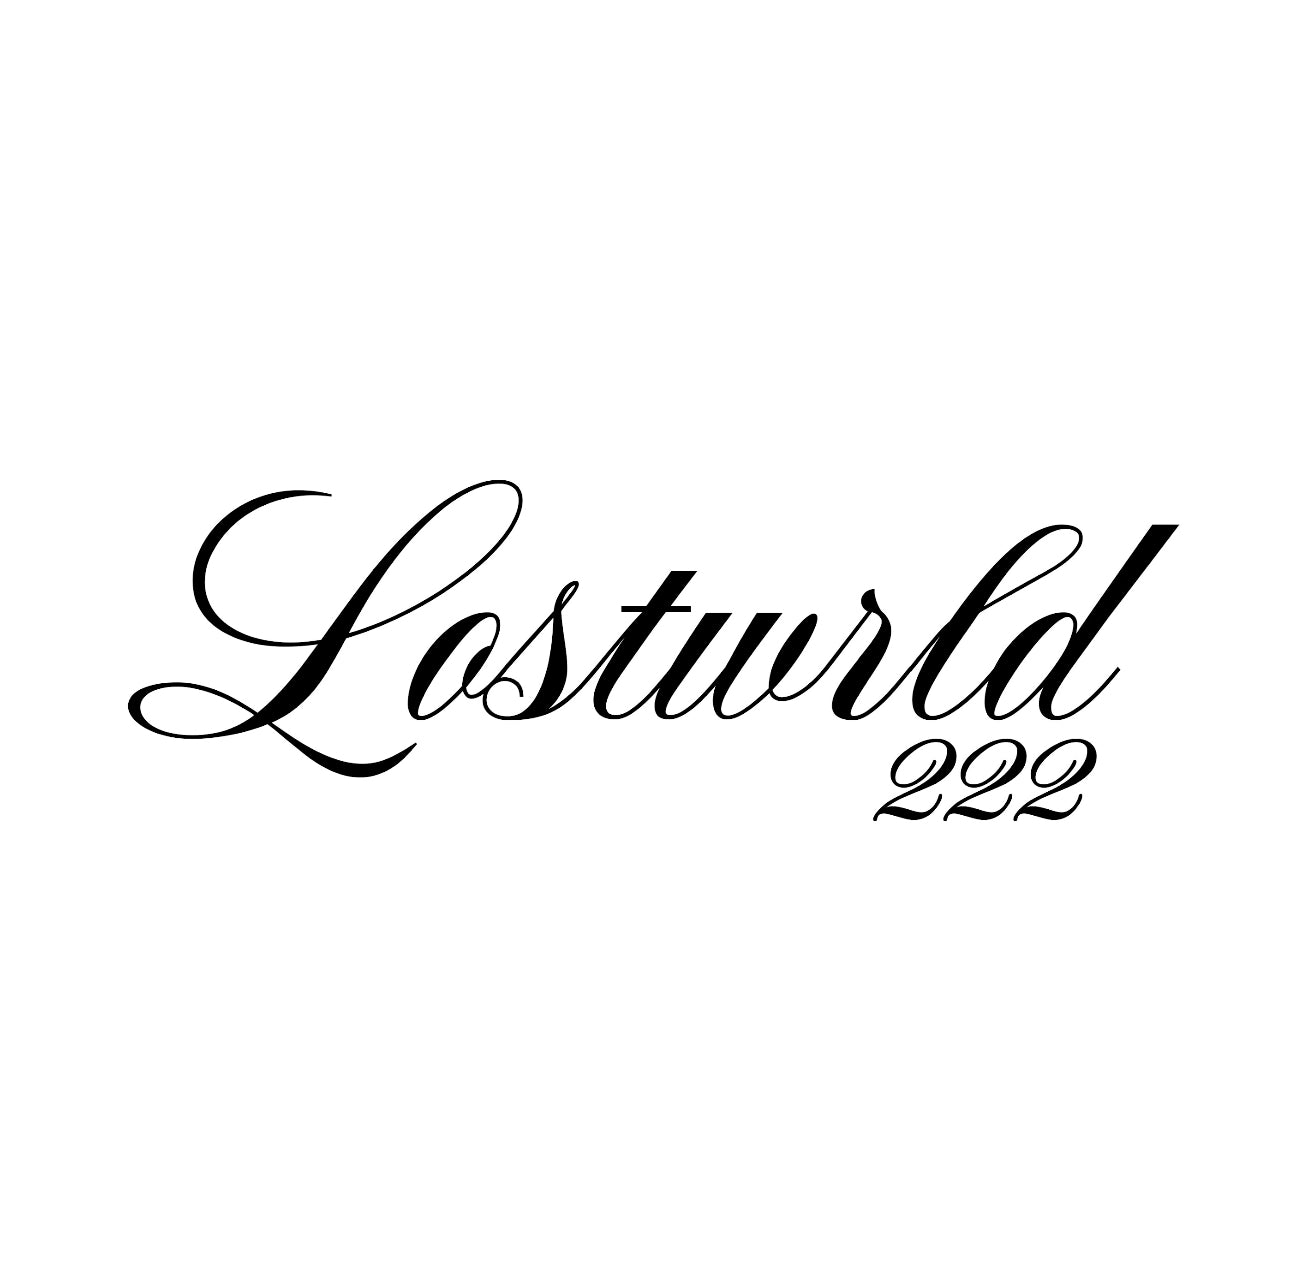 lostwrld222